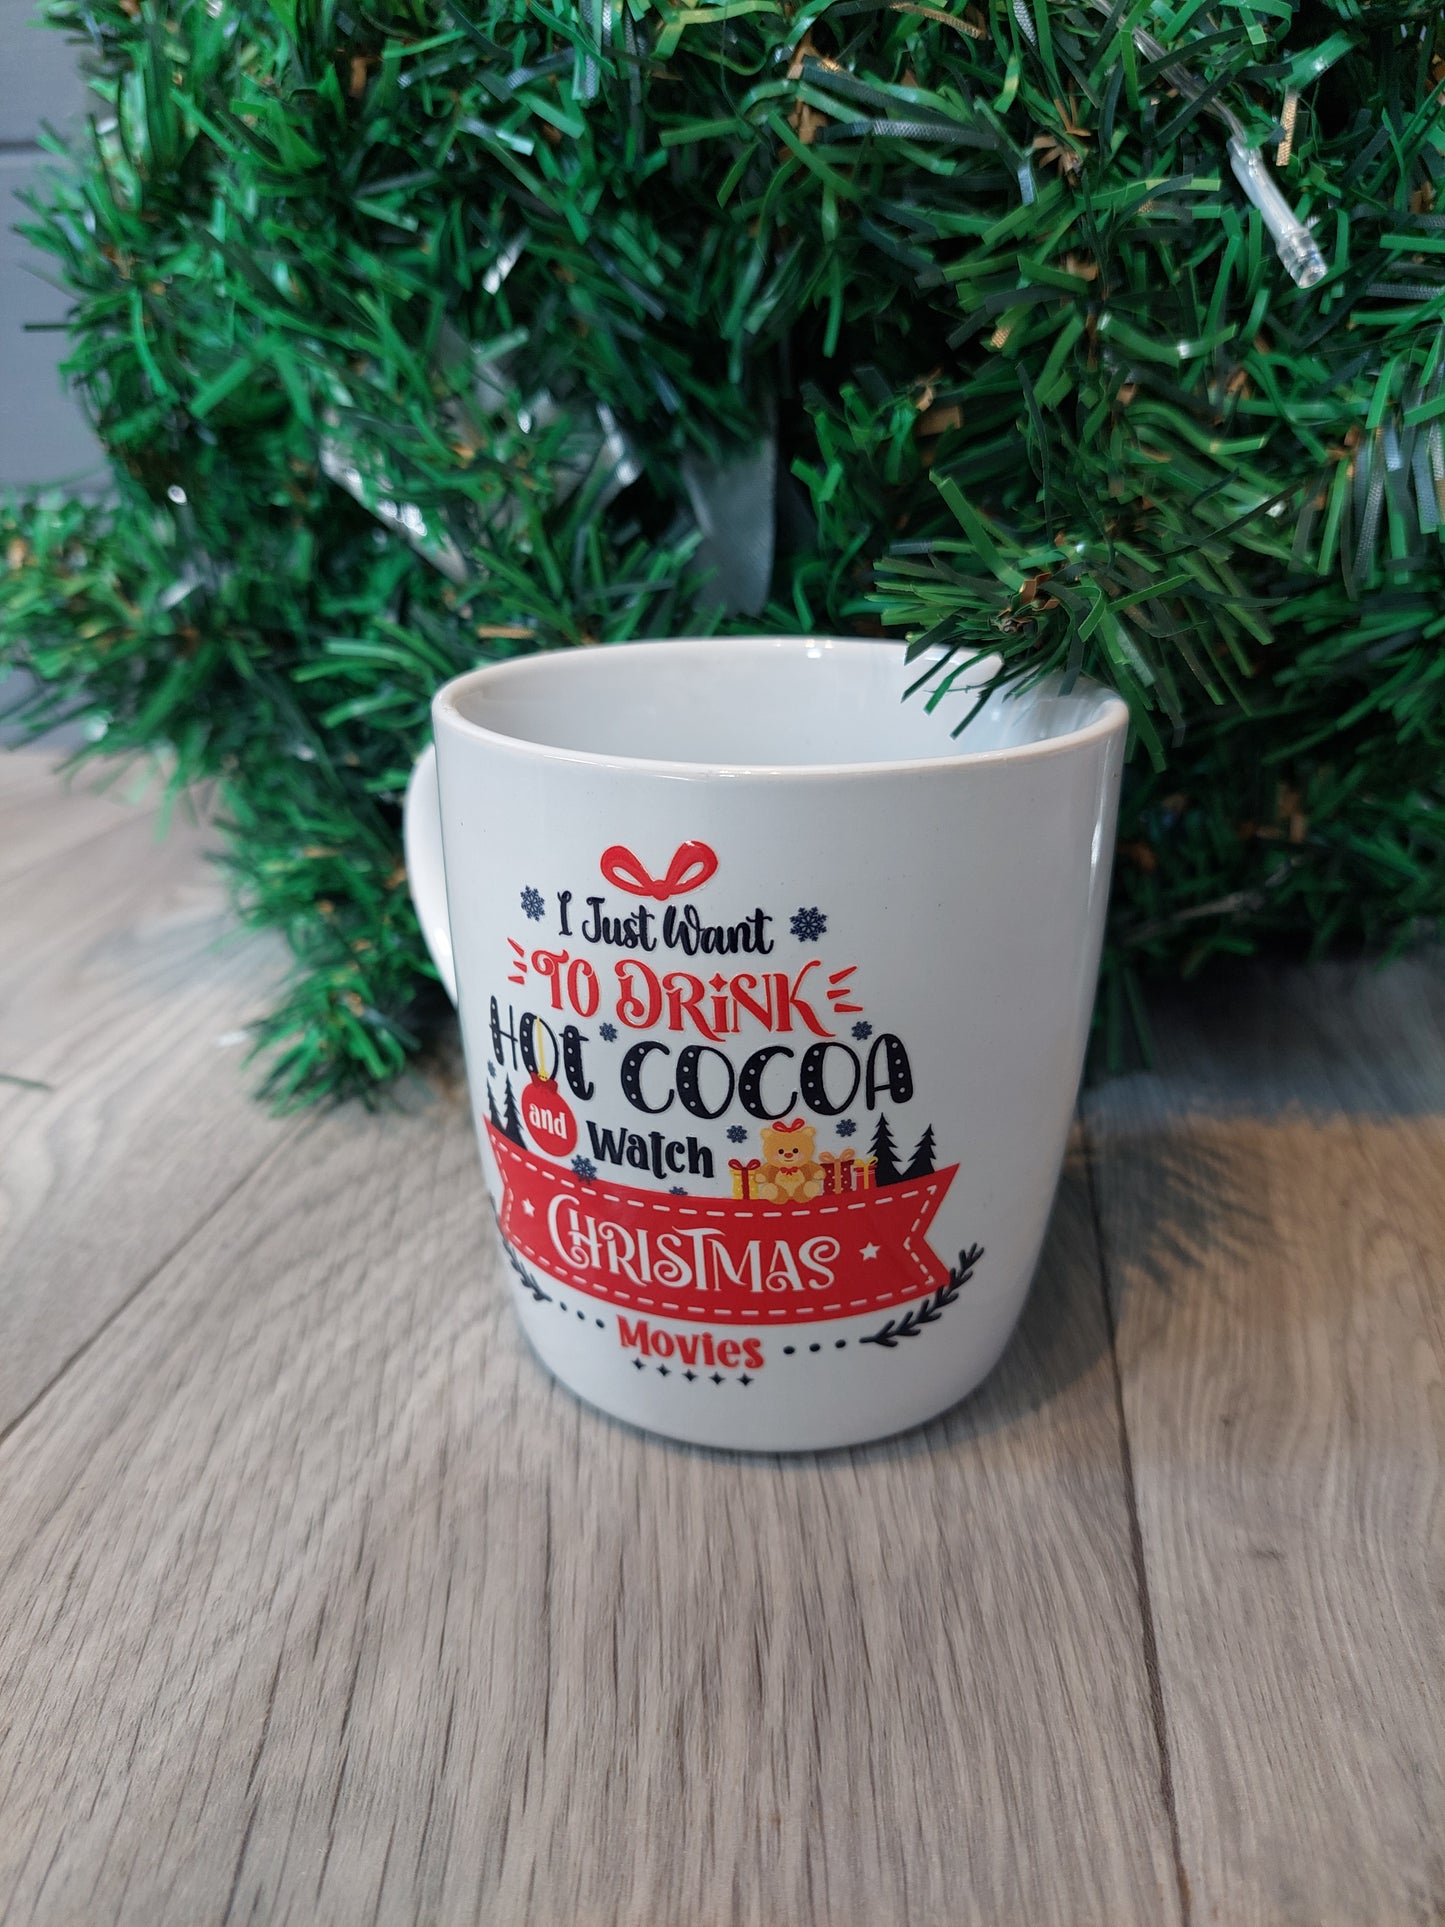 Hot Chocolate and Christmas Movie's White Ceramic Mug